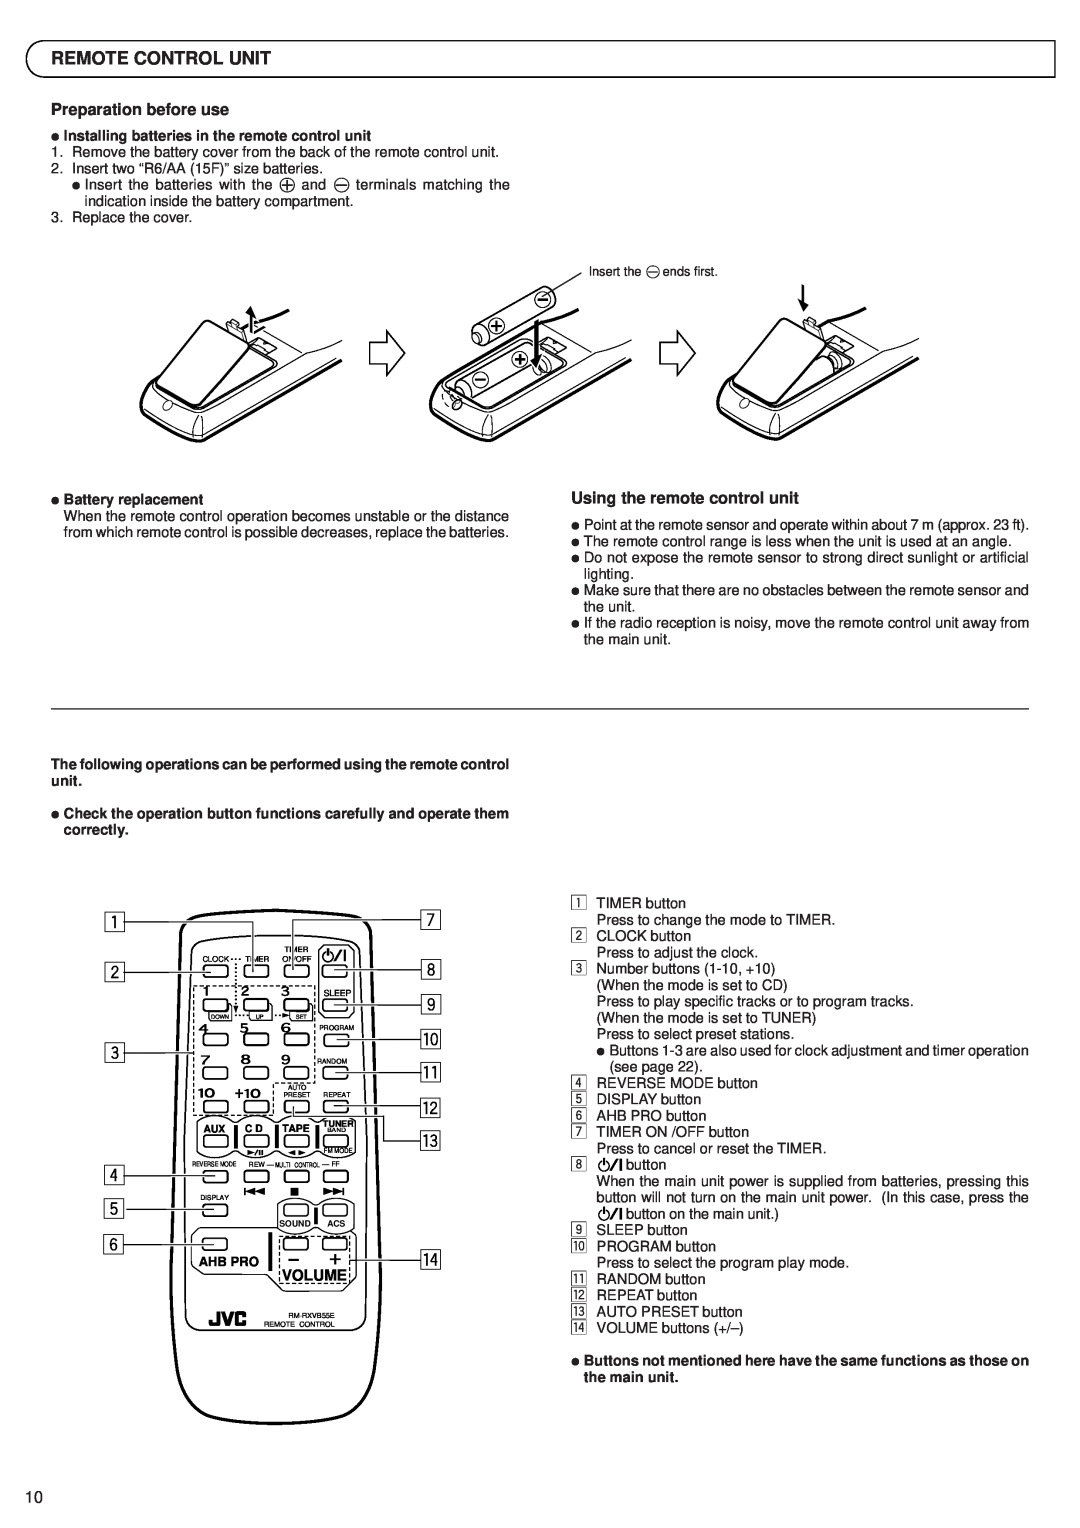 JVC RV-B55 LTD manual Remote Control Unit, ÖInstalling batteries in the remote control unit, ÖBattery replacement, Volume 